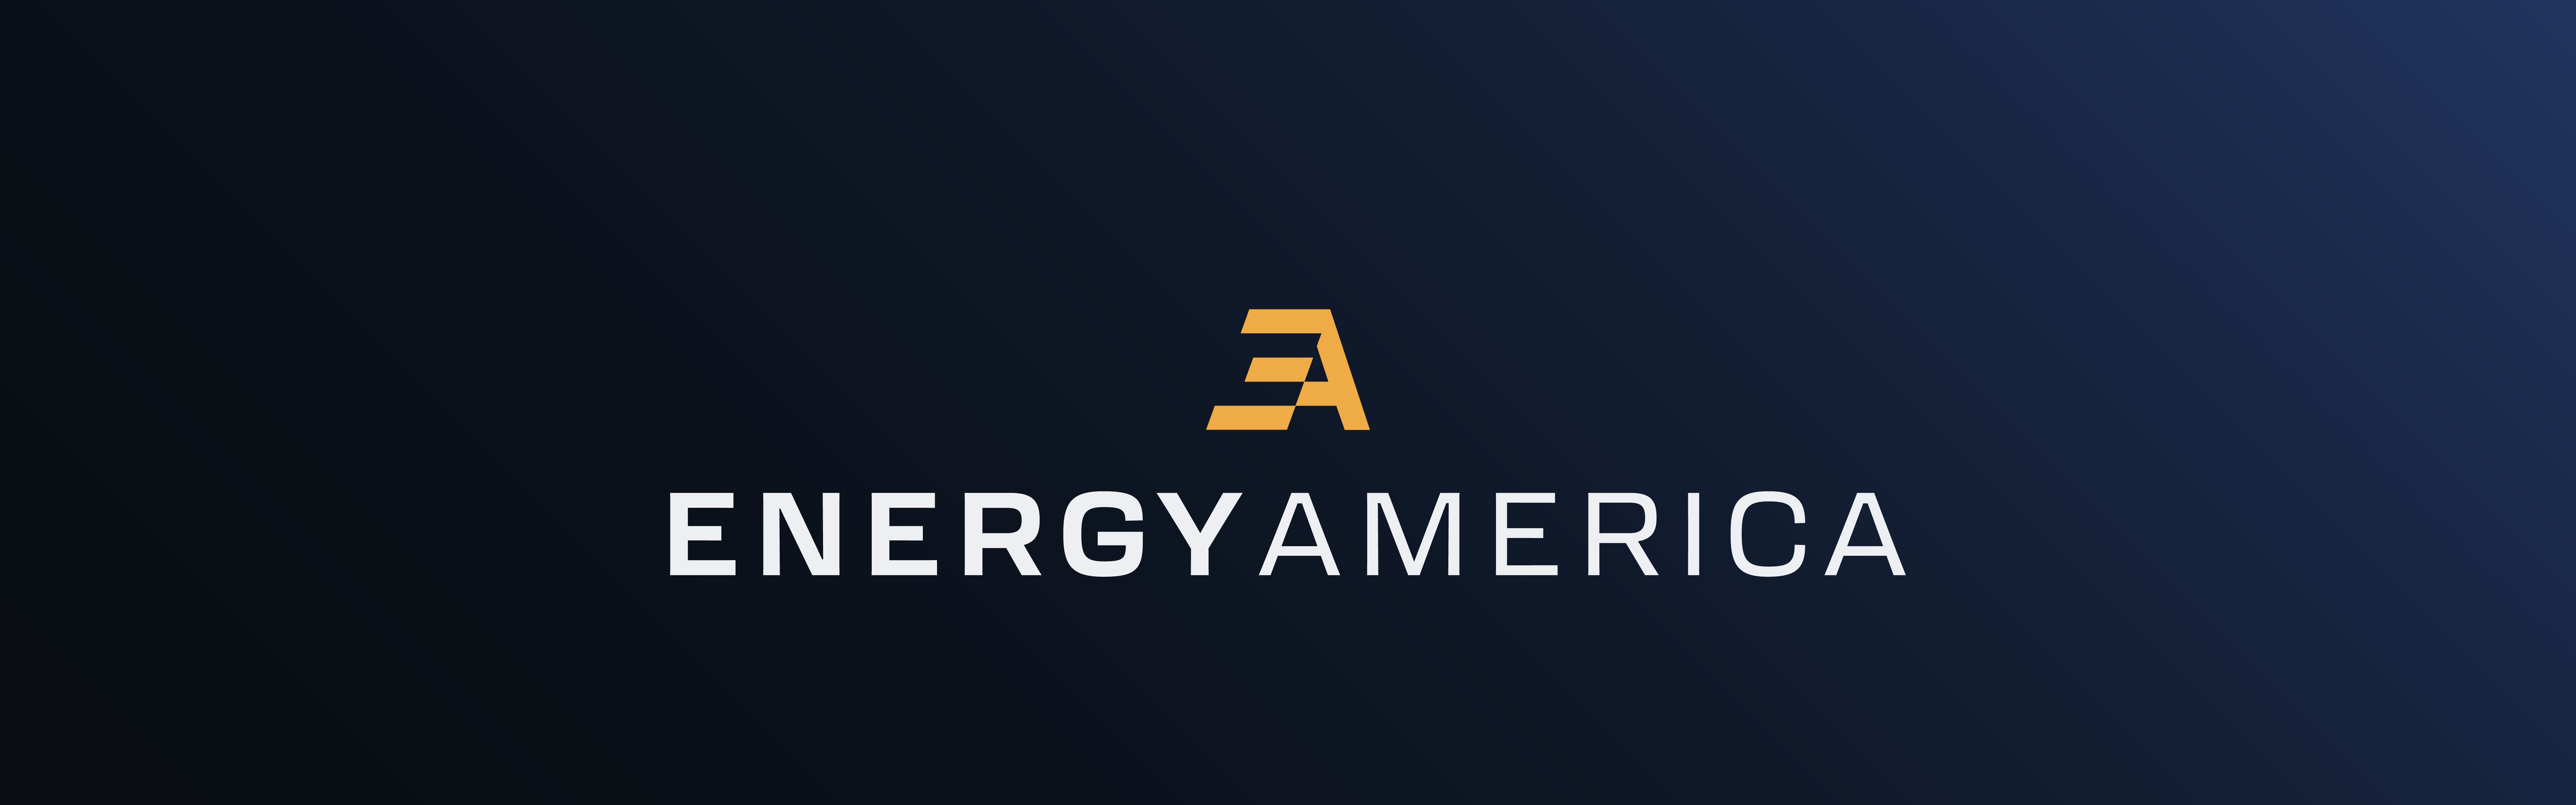 Energy America logo design